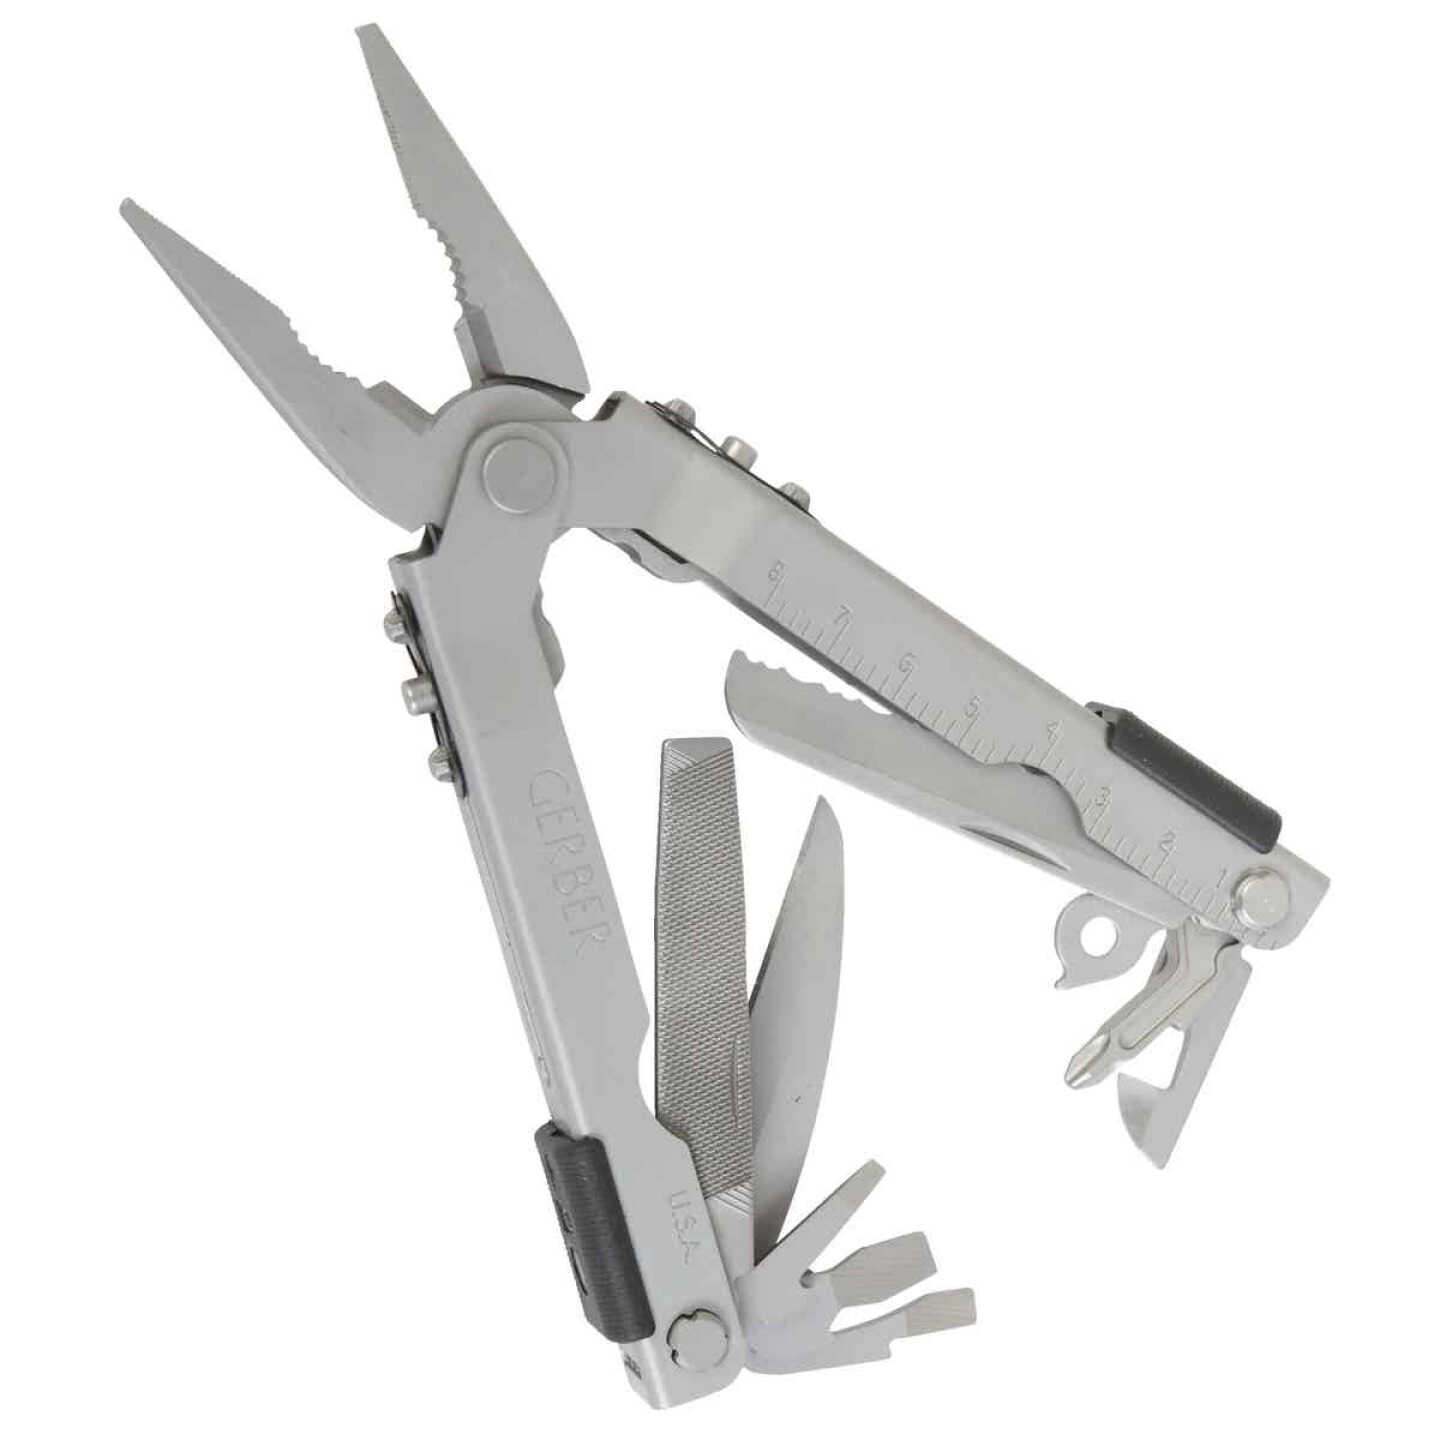 GERBER Multi-Tool: Multi-Tool Plier, 14 Tools, 14 Functions, 4 7/8 in  Closed Lg, 6 1/2 in Open Lg